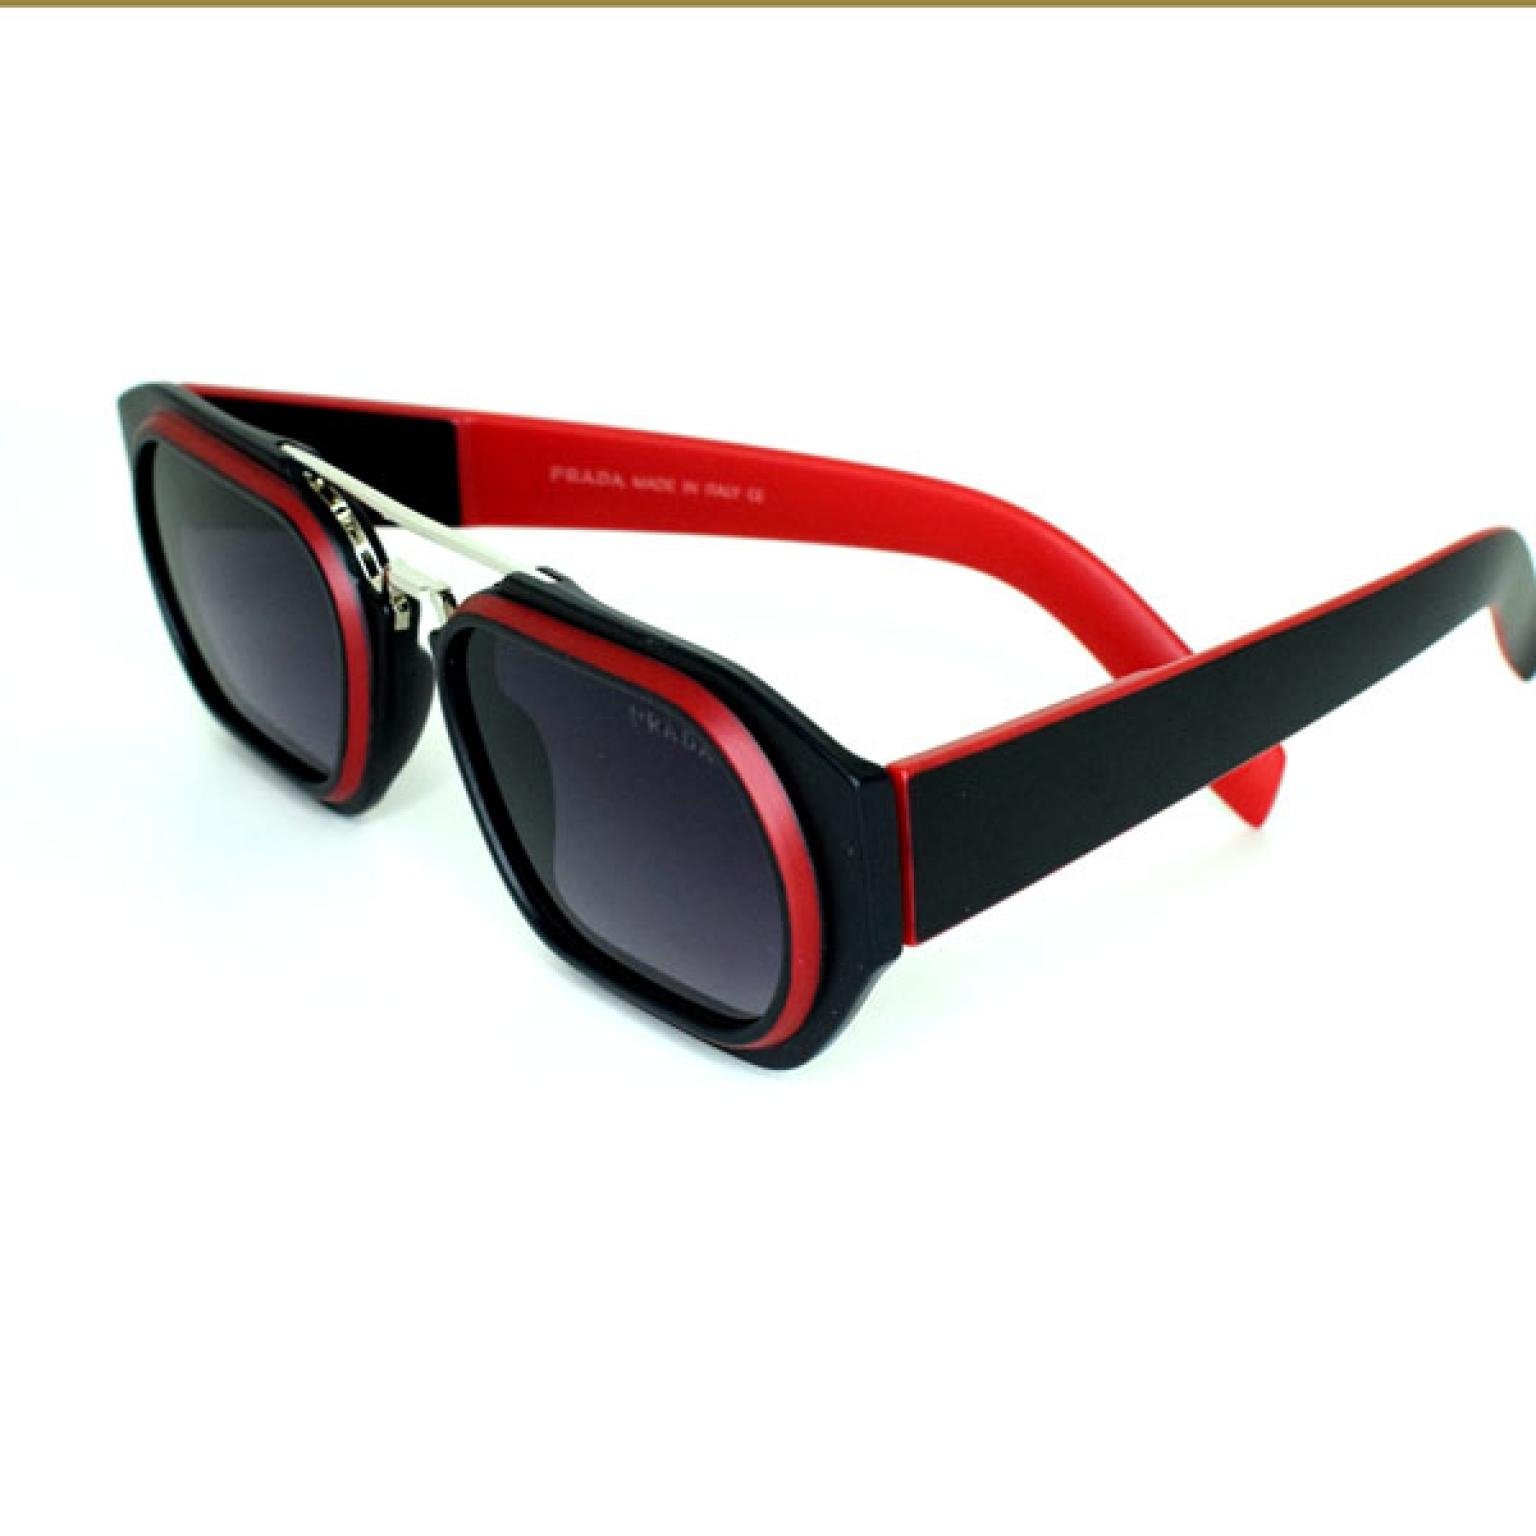 Most Fashionable Trendy Unisex Sun Glasses For Men Women Driving 